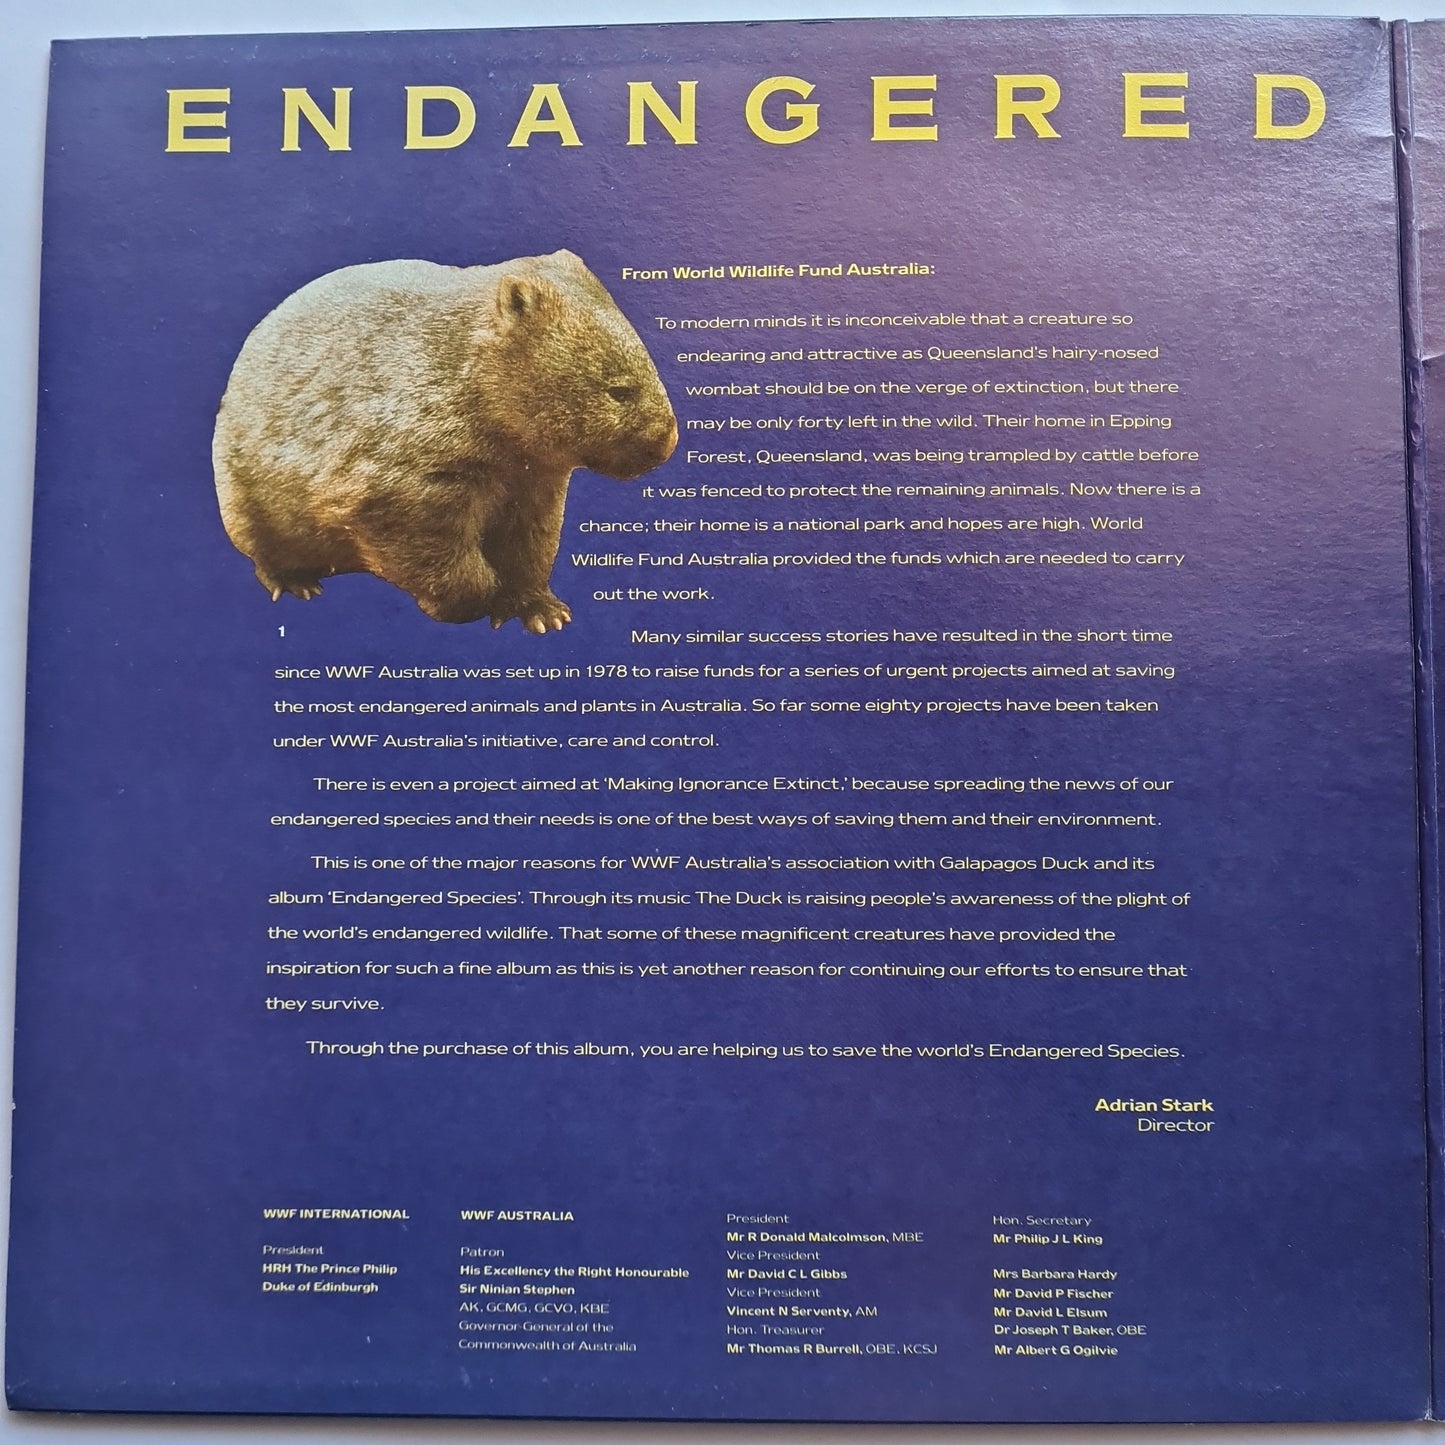 Galapagos Duck – Endangered Species - 1985 - Vinyl Record (Gatefold)